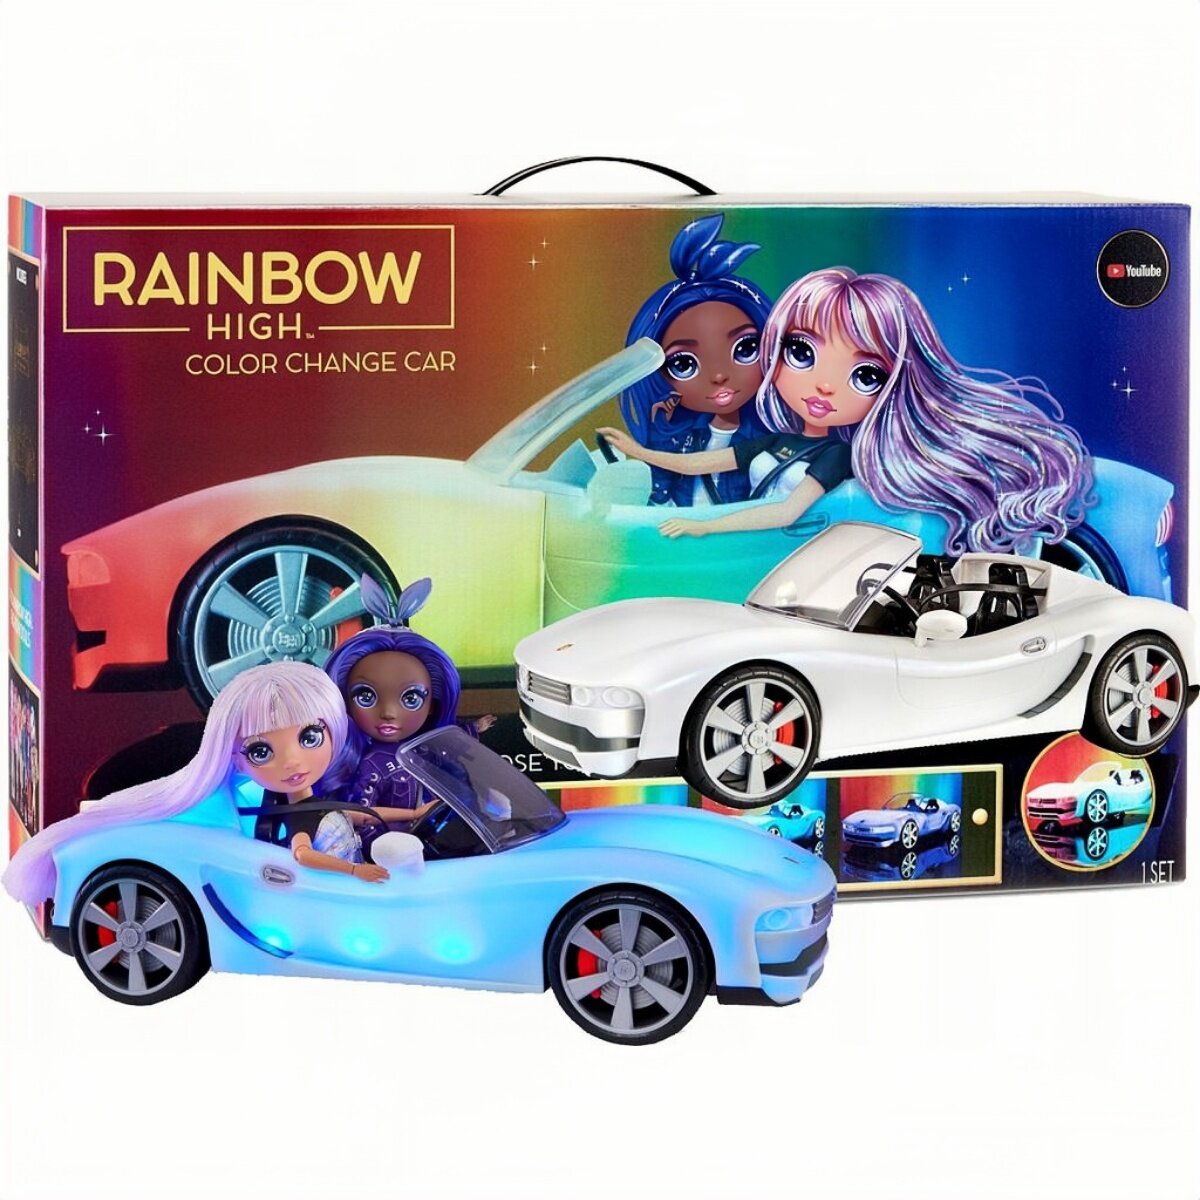 Транспорт для куклы Автомобиль для кукол Rainbow High Рэйнбоу Хай